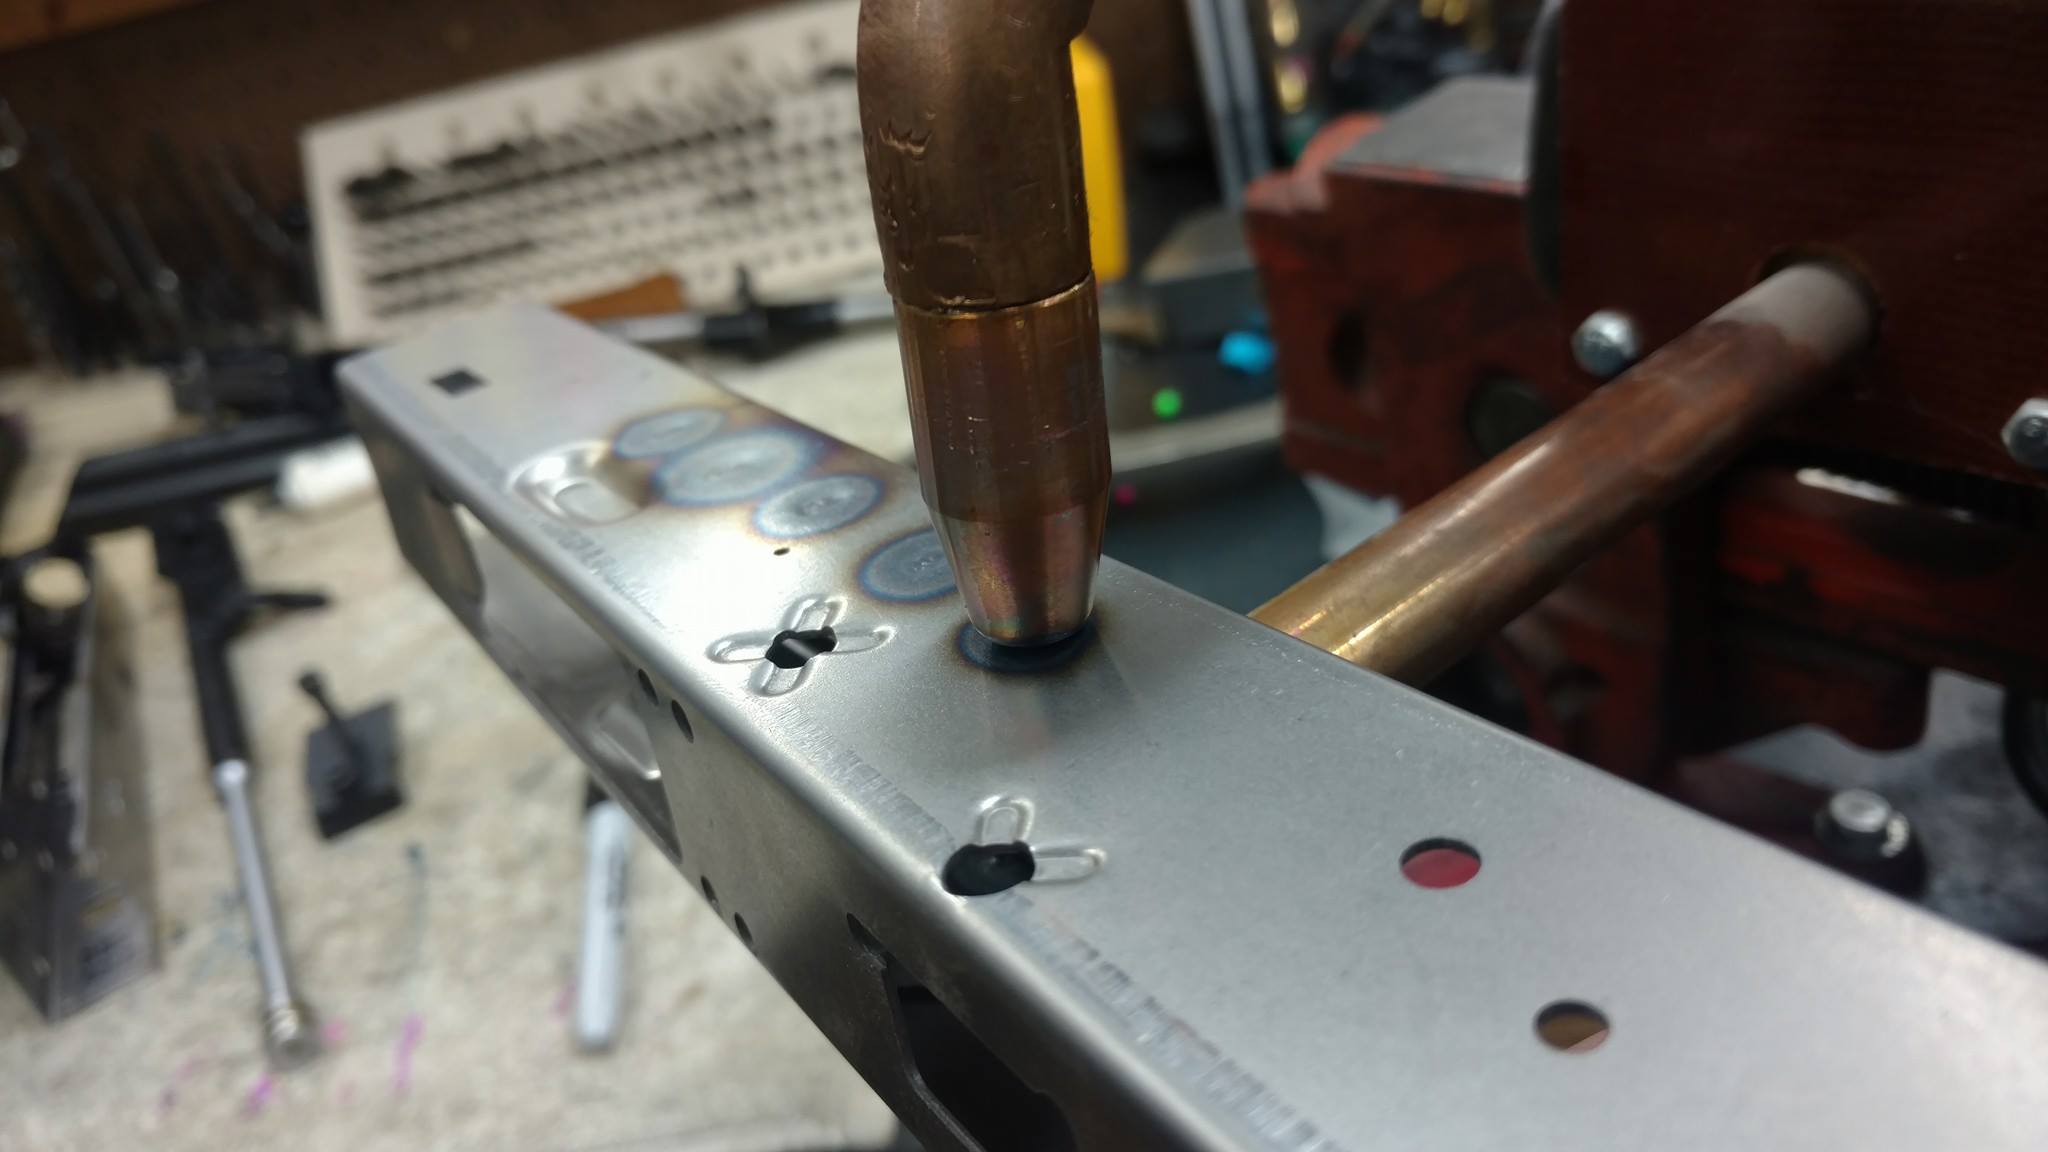 Spot welding AK receivers